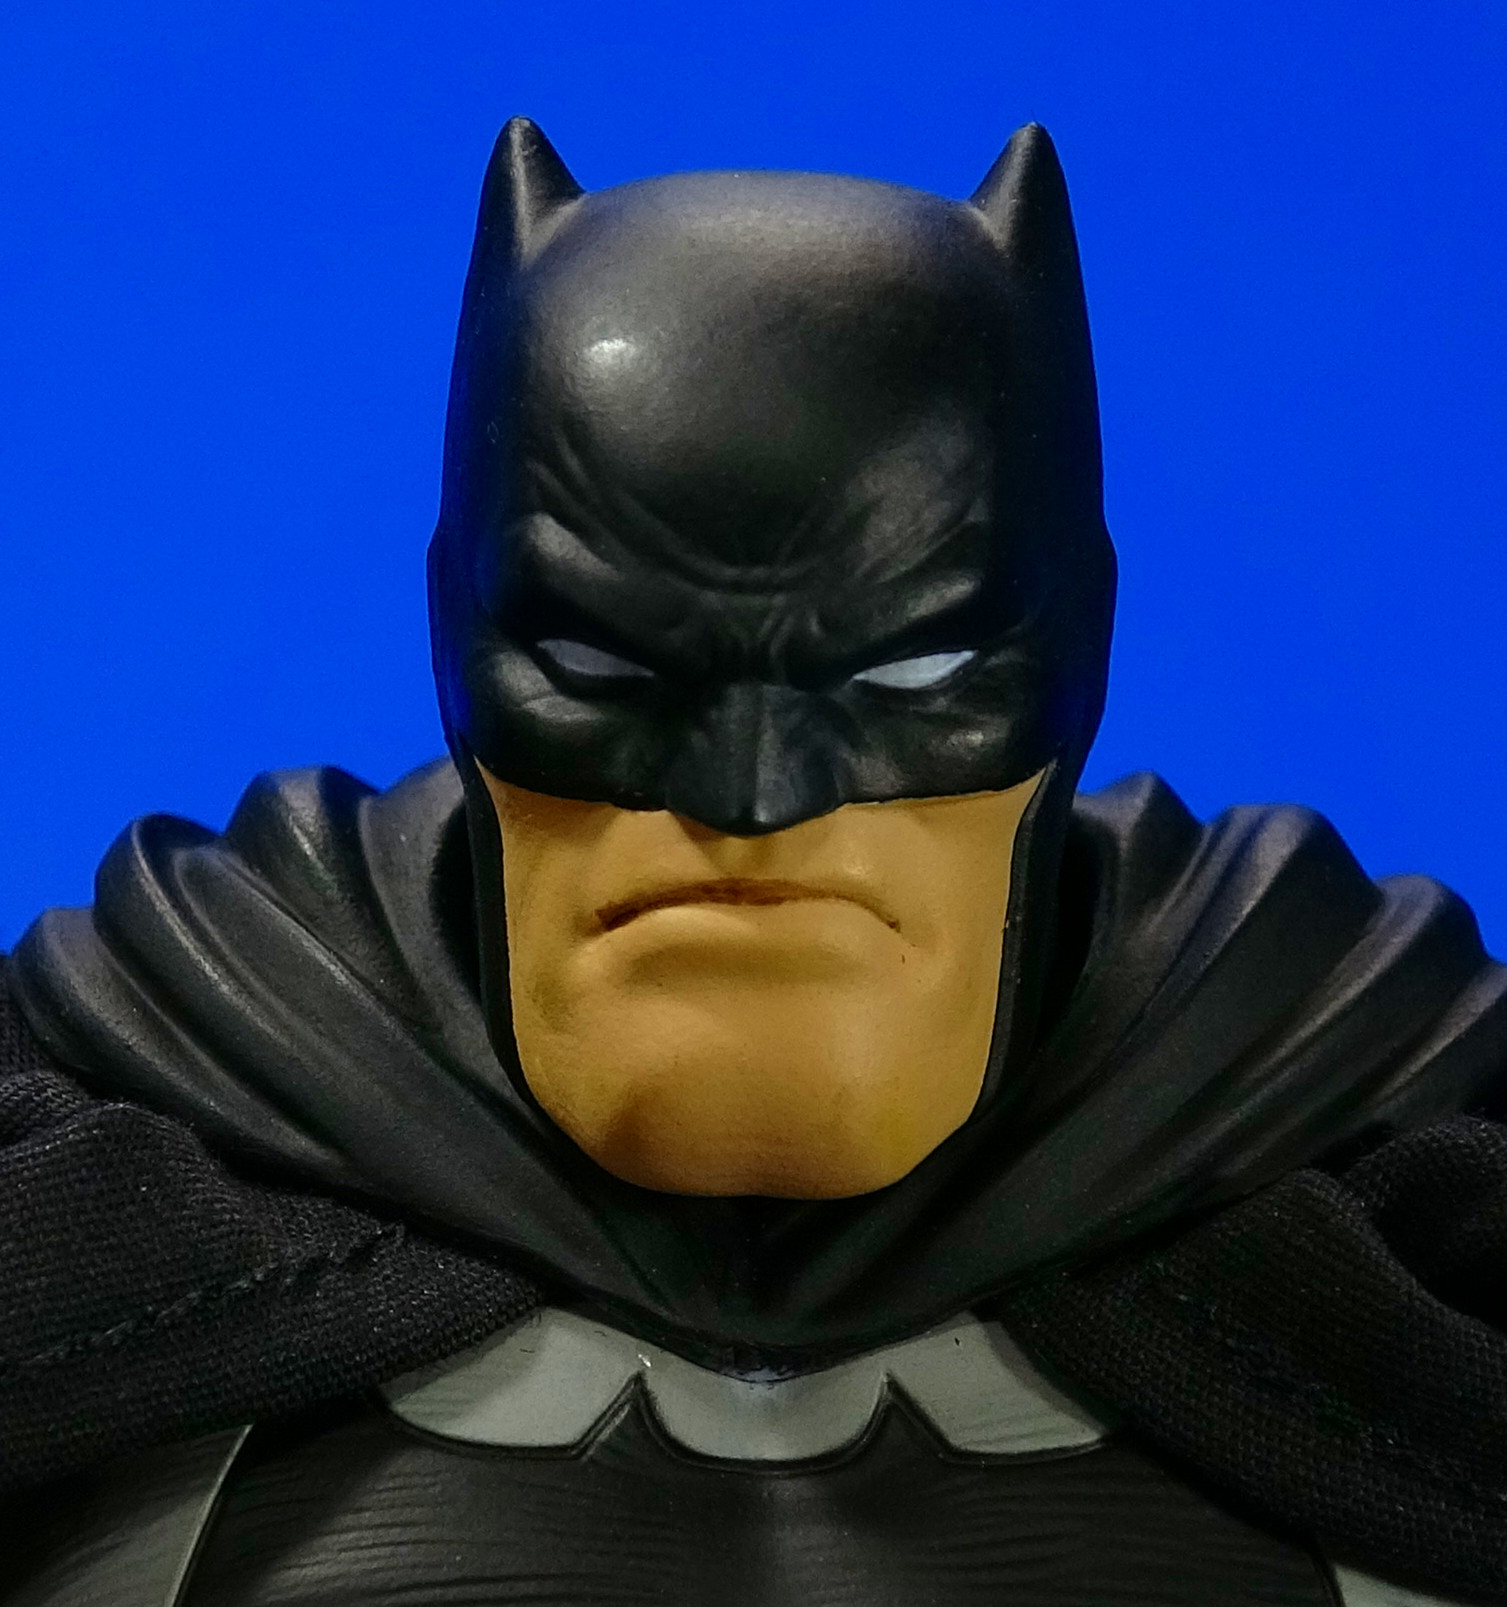 Medicom: MAFEX The Dark Knight Returns Batman Video and Quick Pics